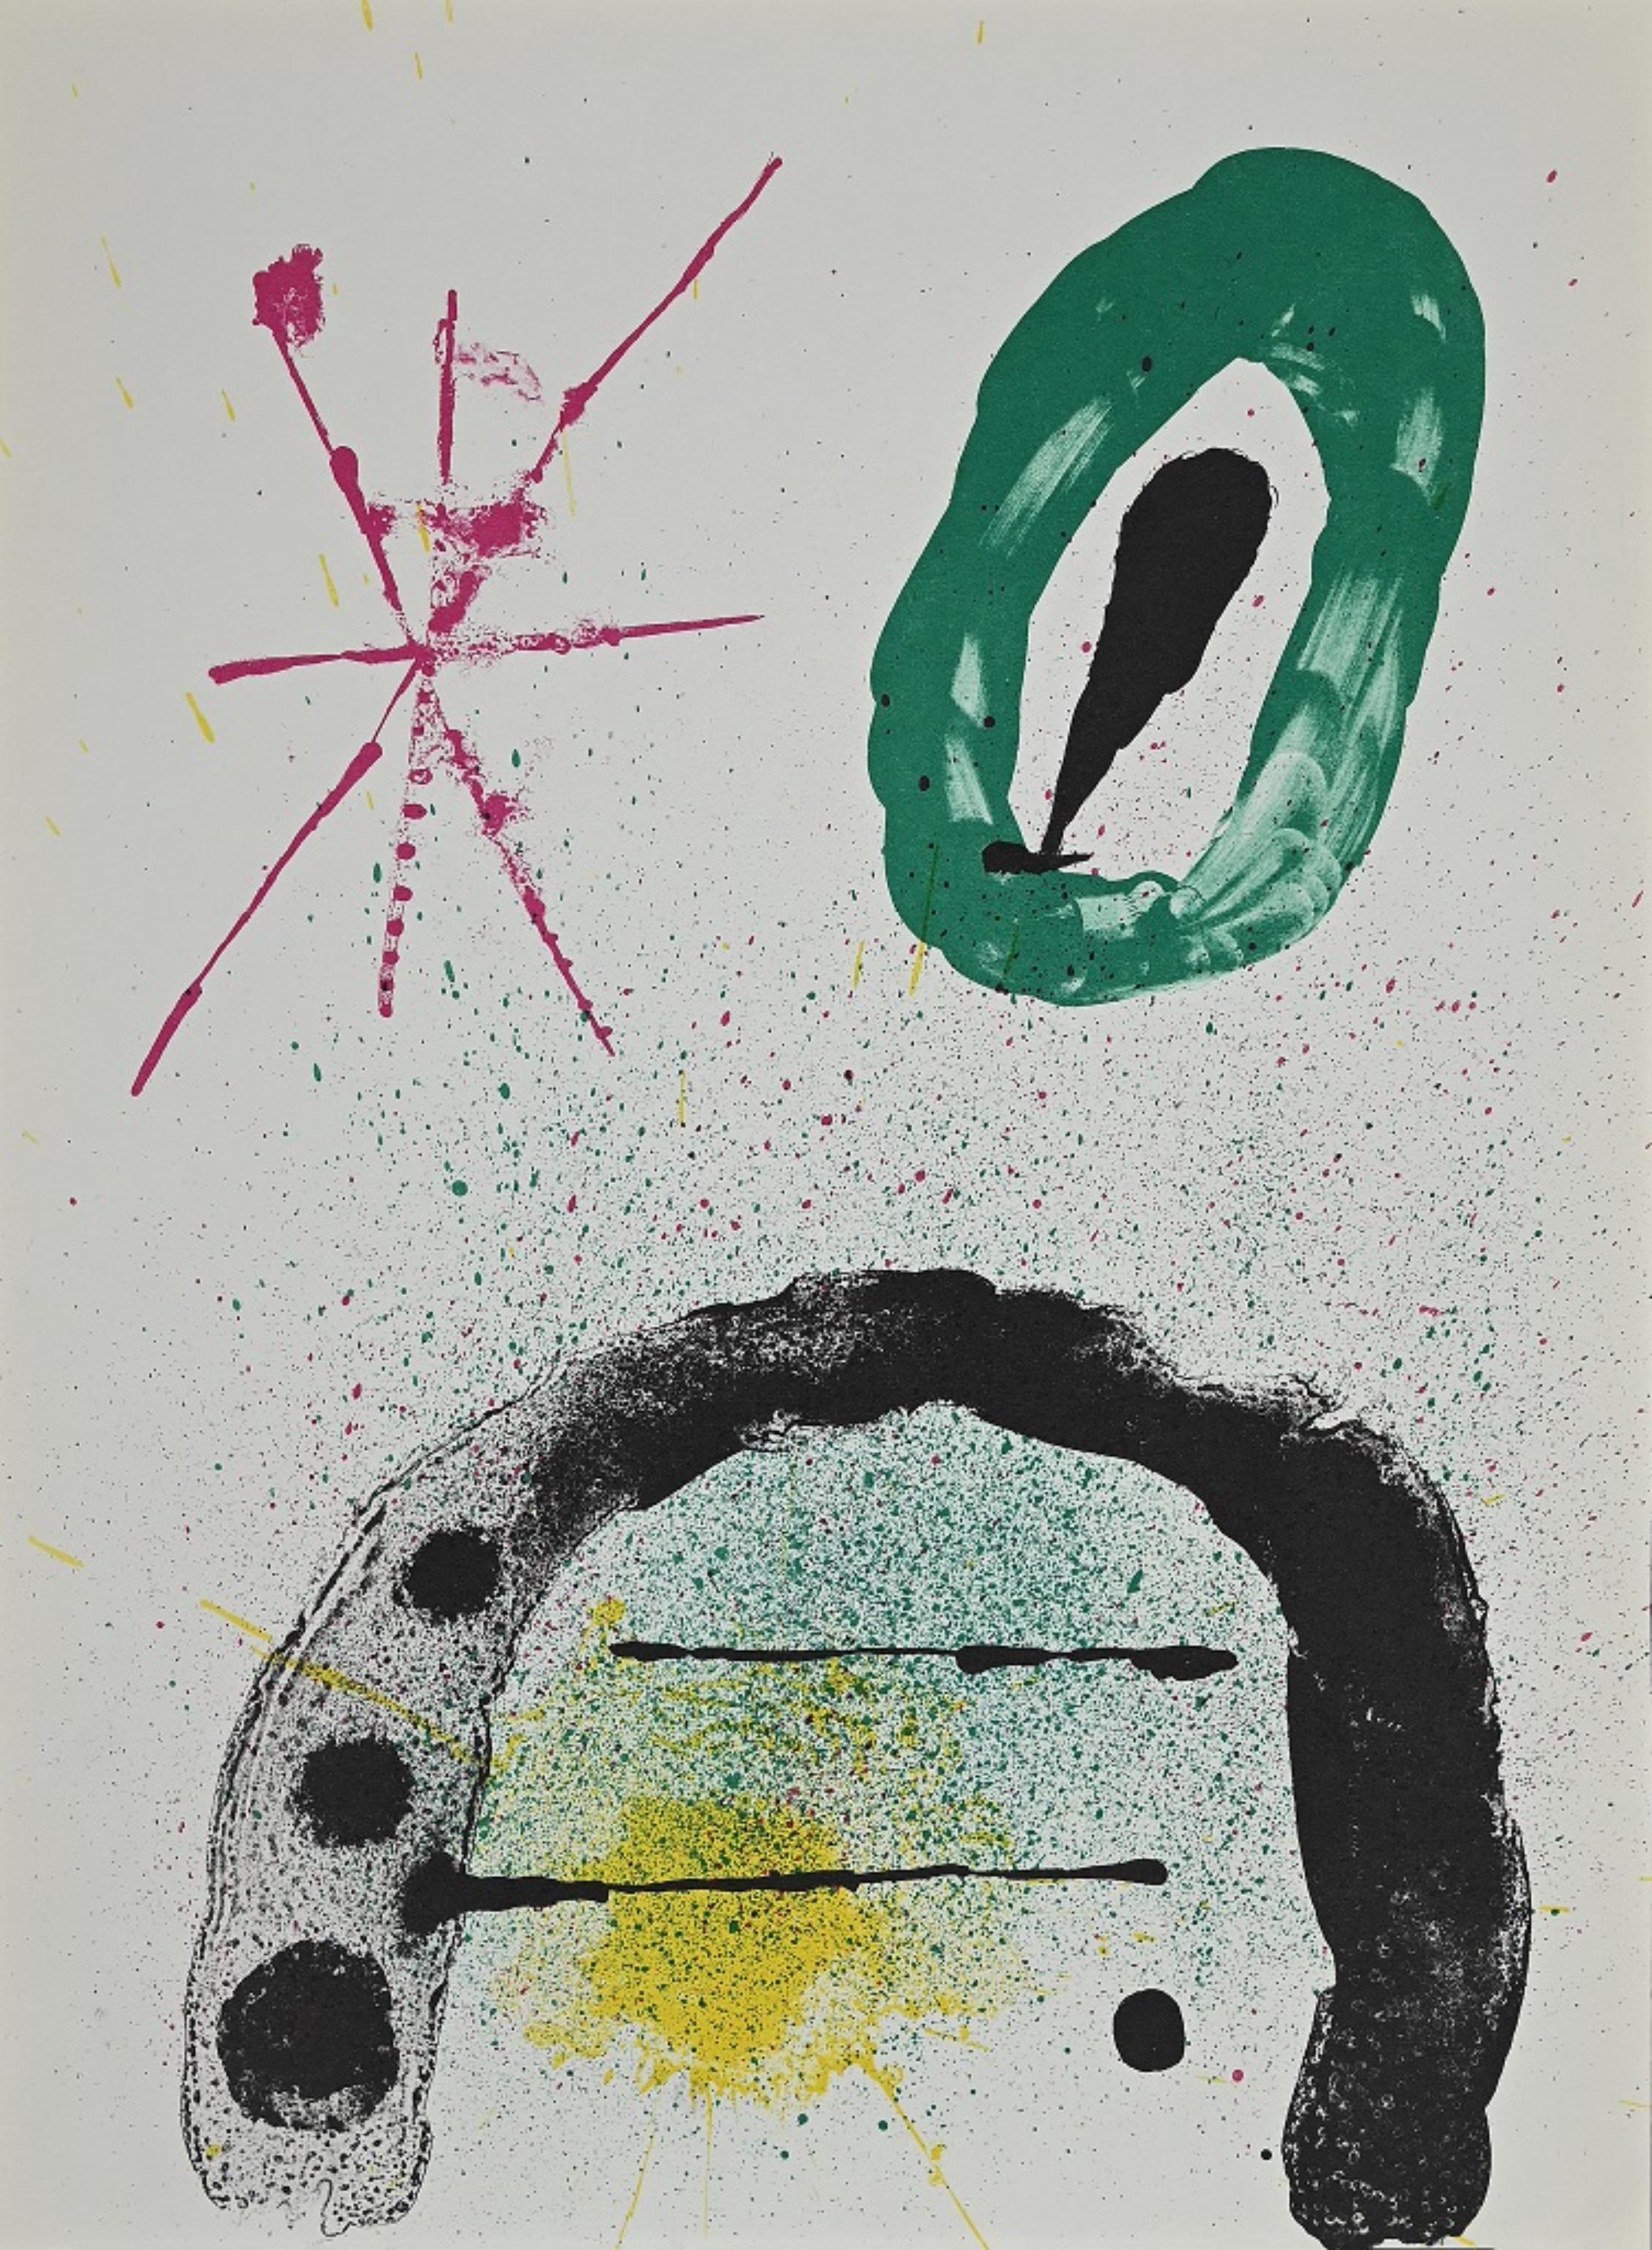 Joan Miró Abstract Print - The Gardener's Daughter - Original Lithograph by Joan Mirò - 1963